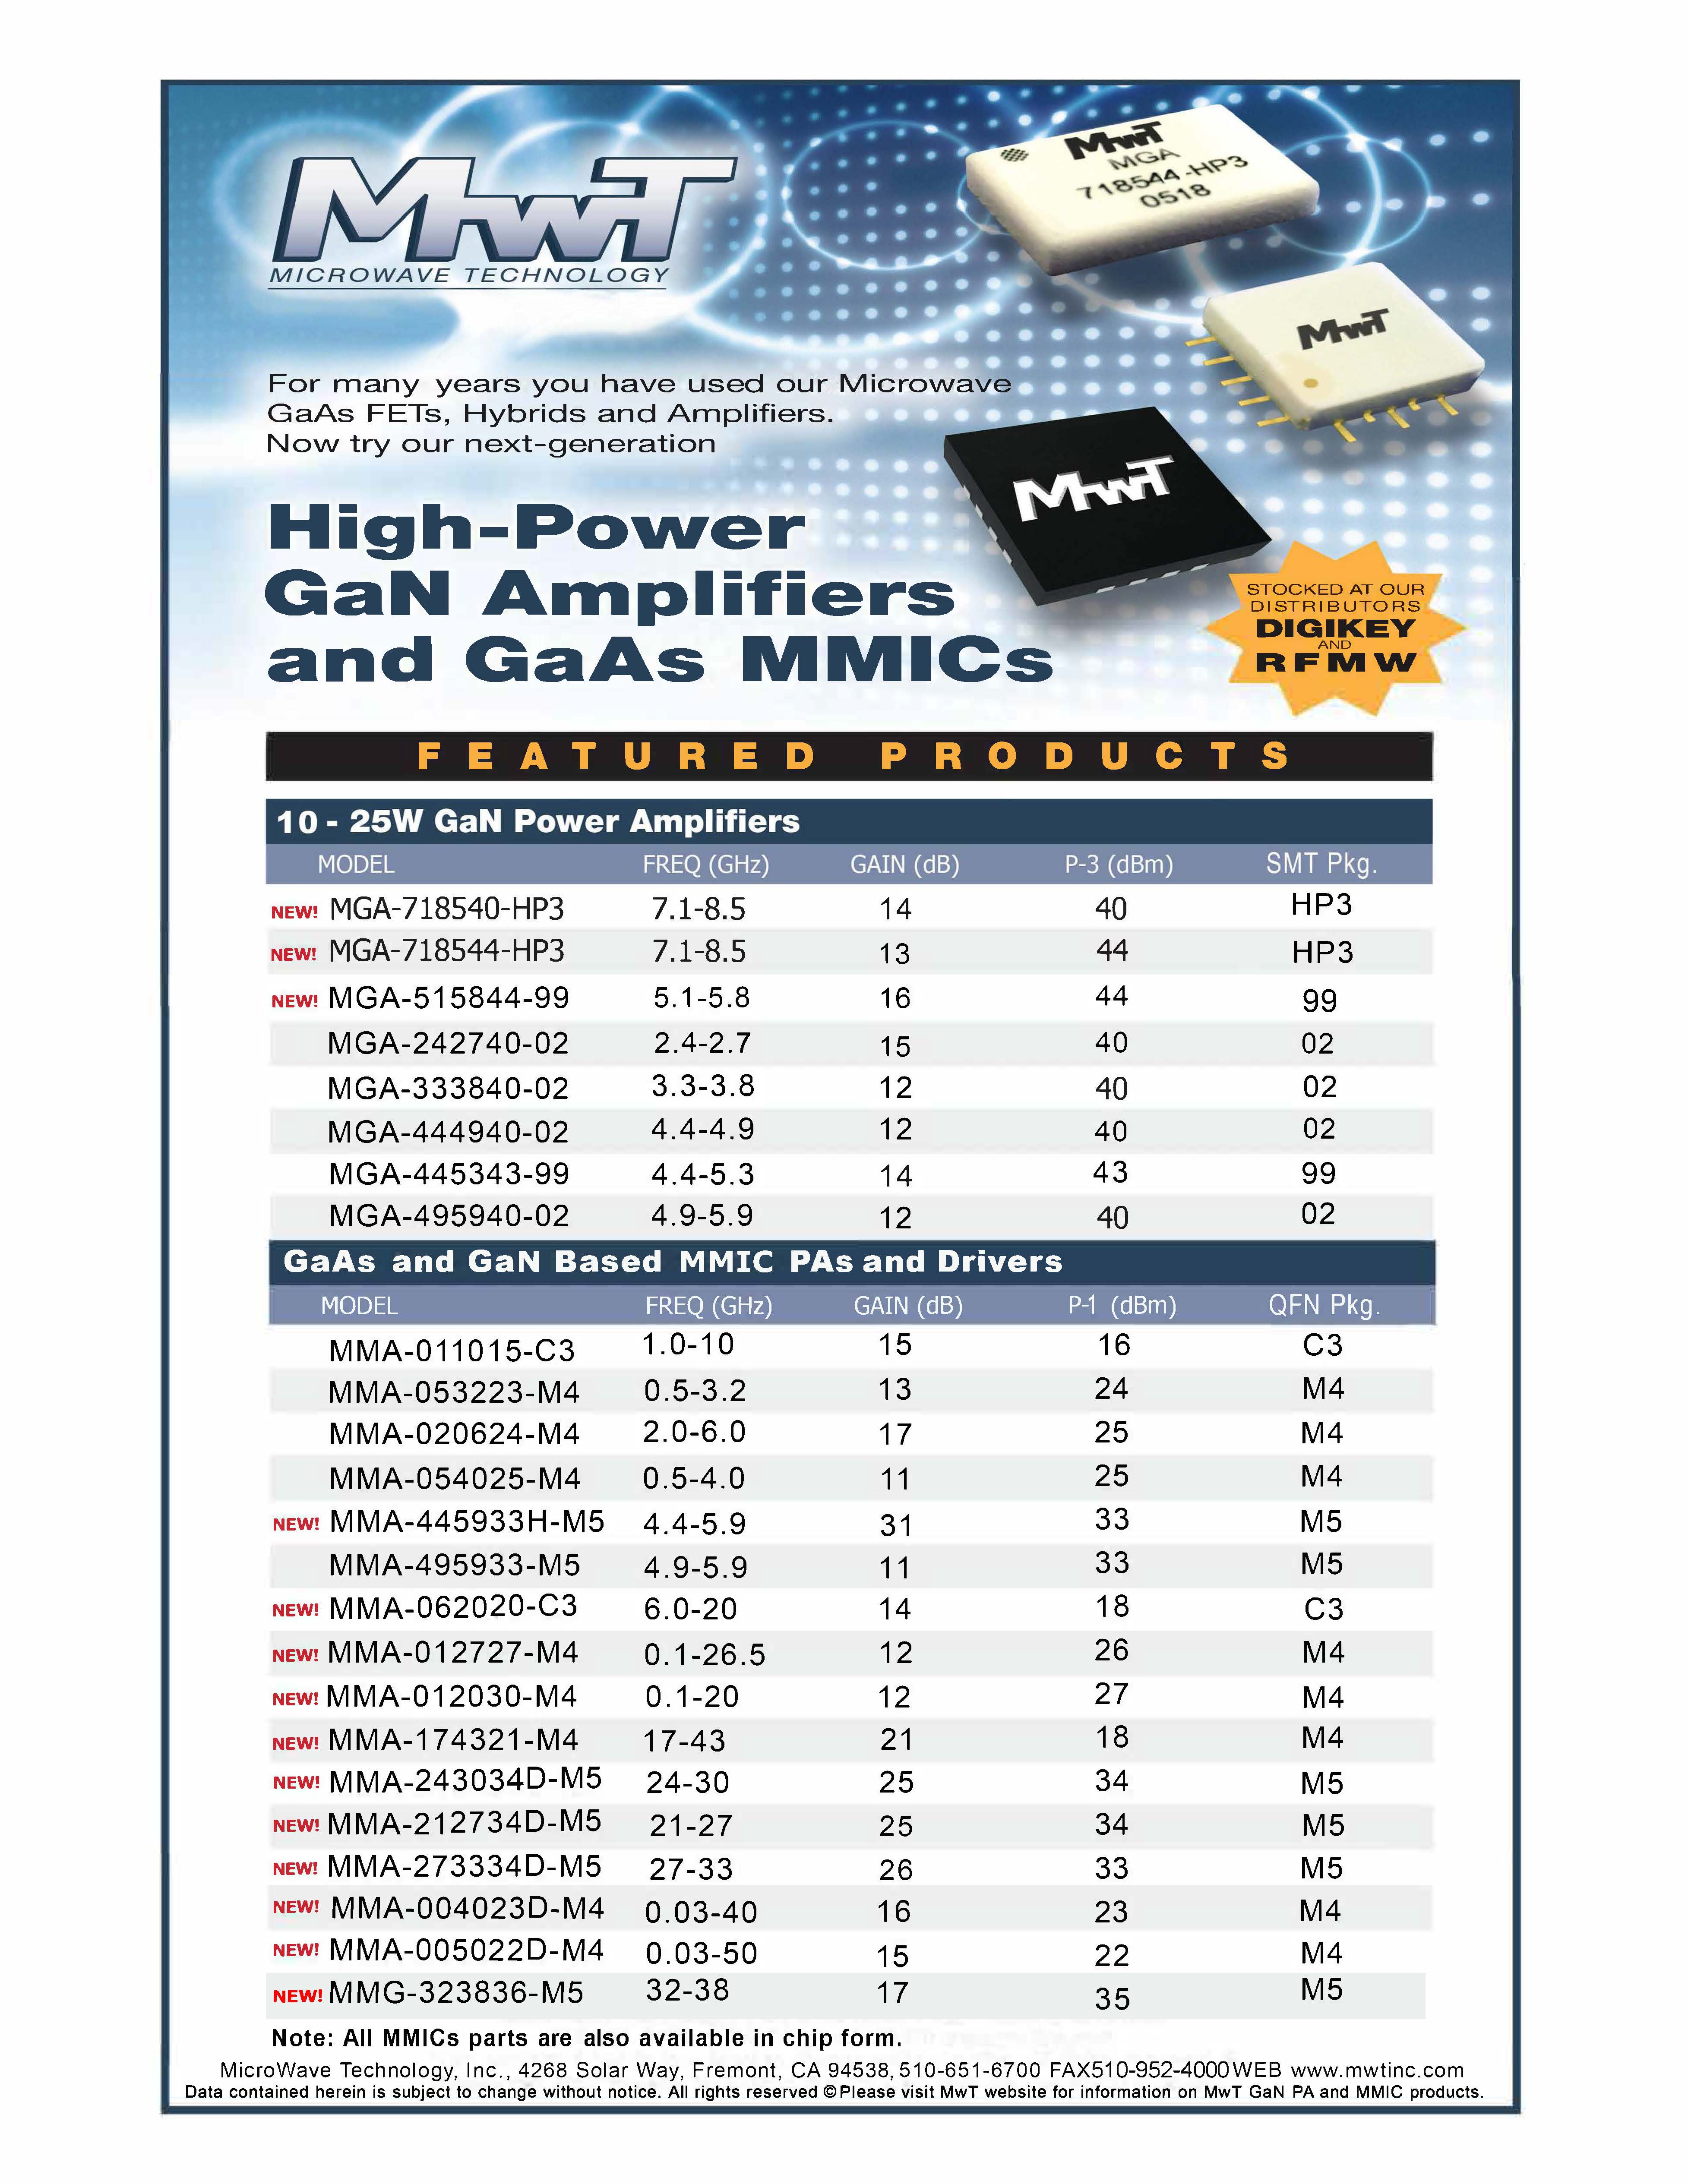 2021 MwT Ad - High-Power GaN Amplifiers and MMICs.jpg